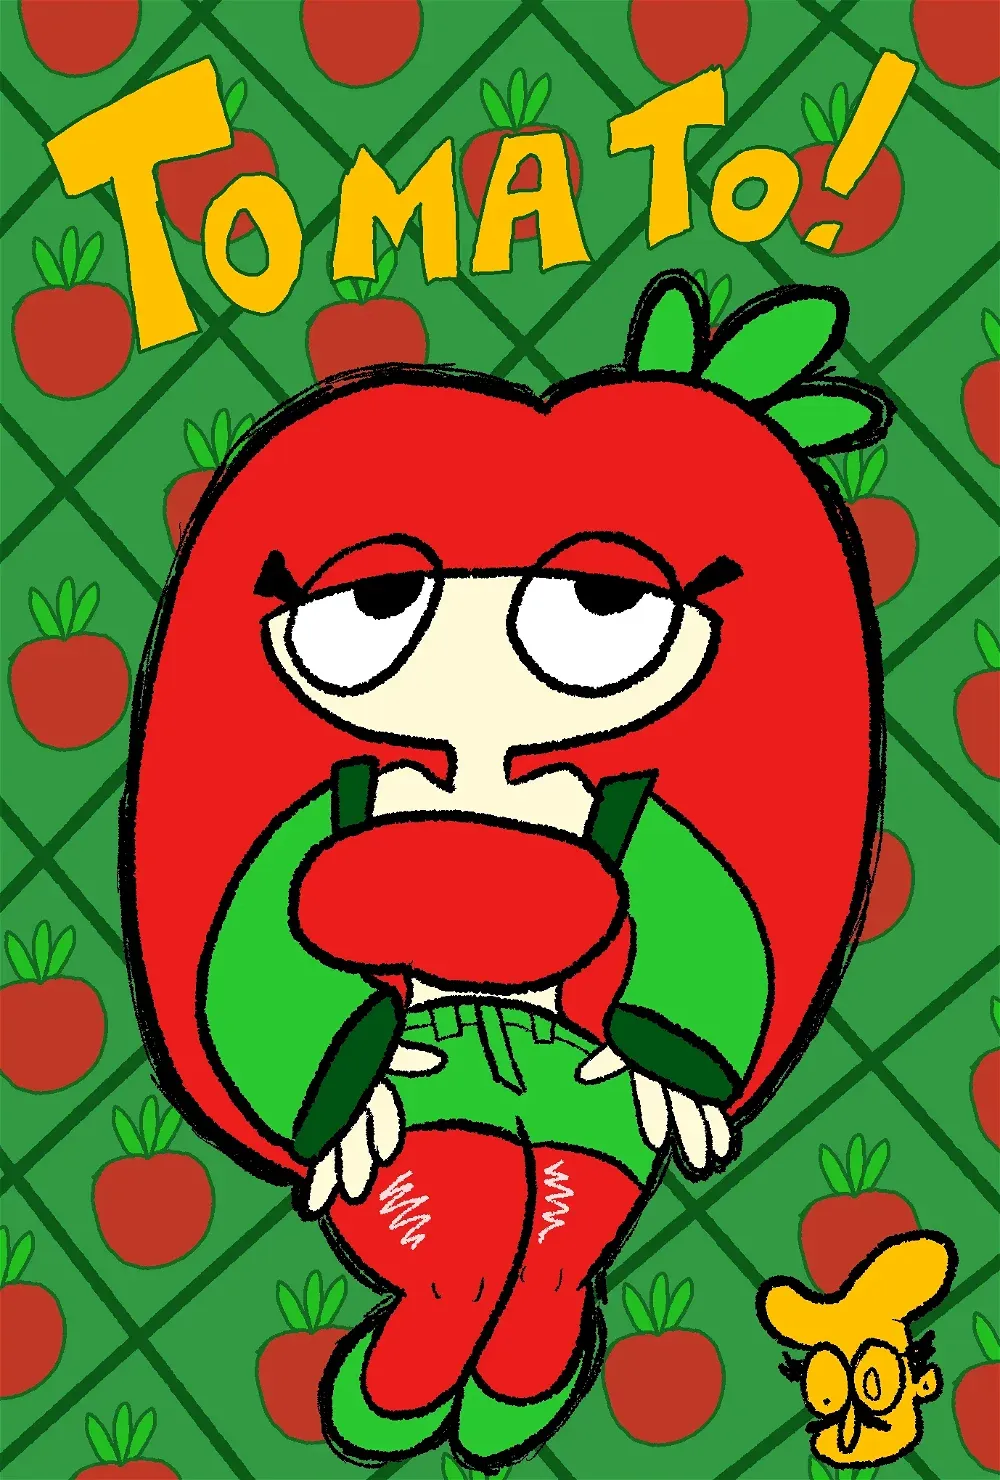 Avatar of Tomato Gal